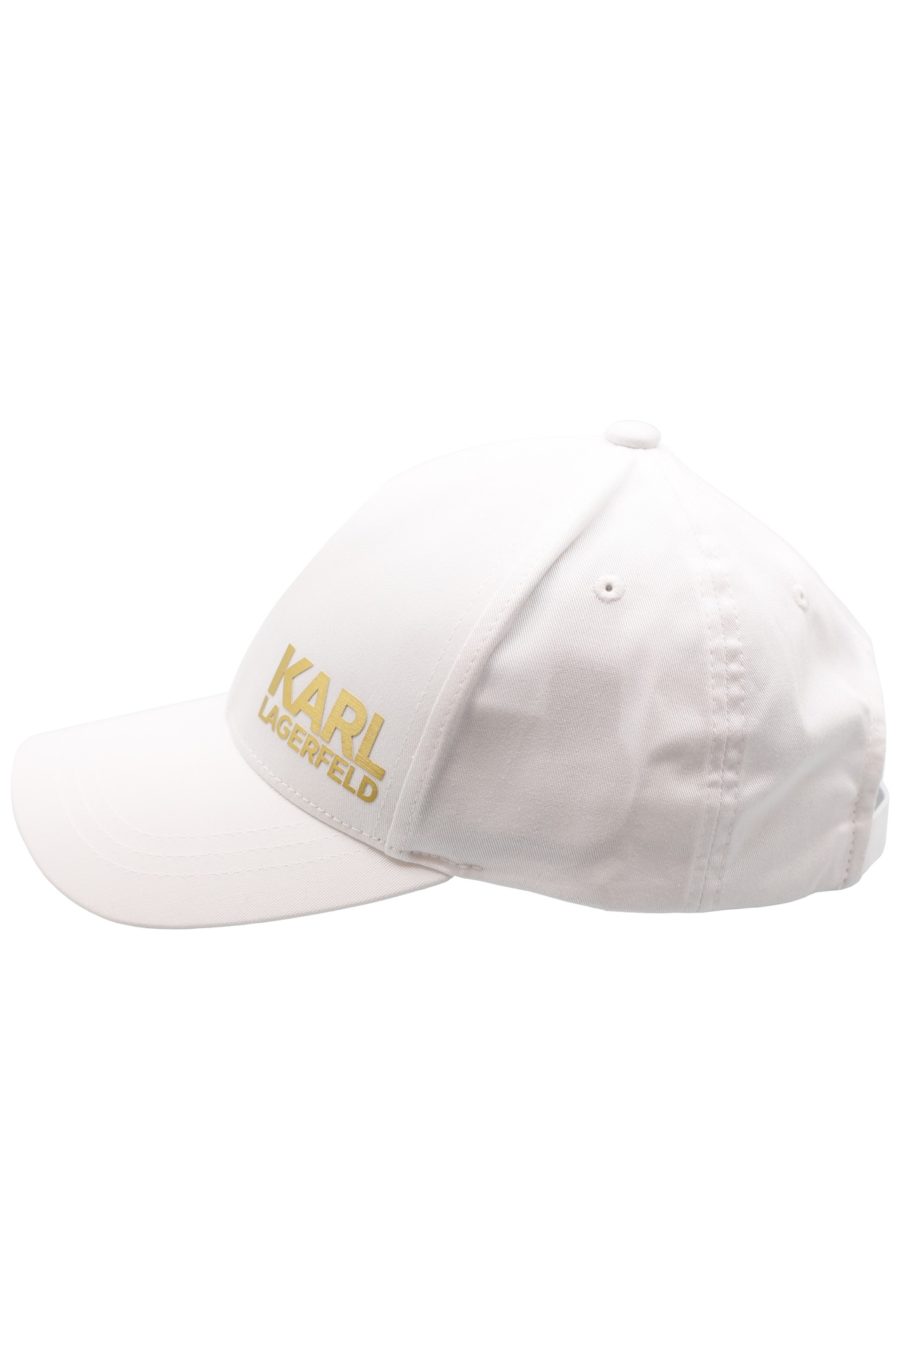 White cap with gold "Karl Legerfeld" logo - 8f65e3acb174f305b4df6d856dbc771db485e348